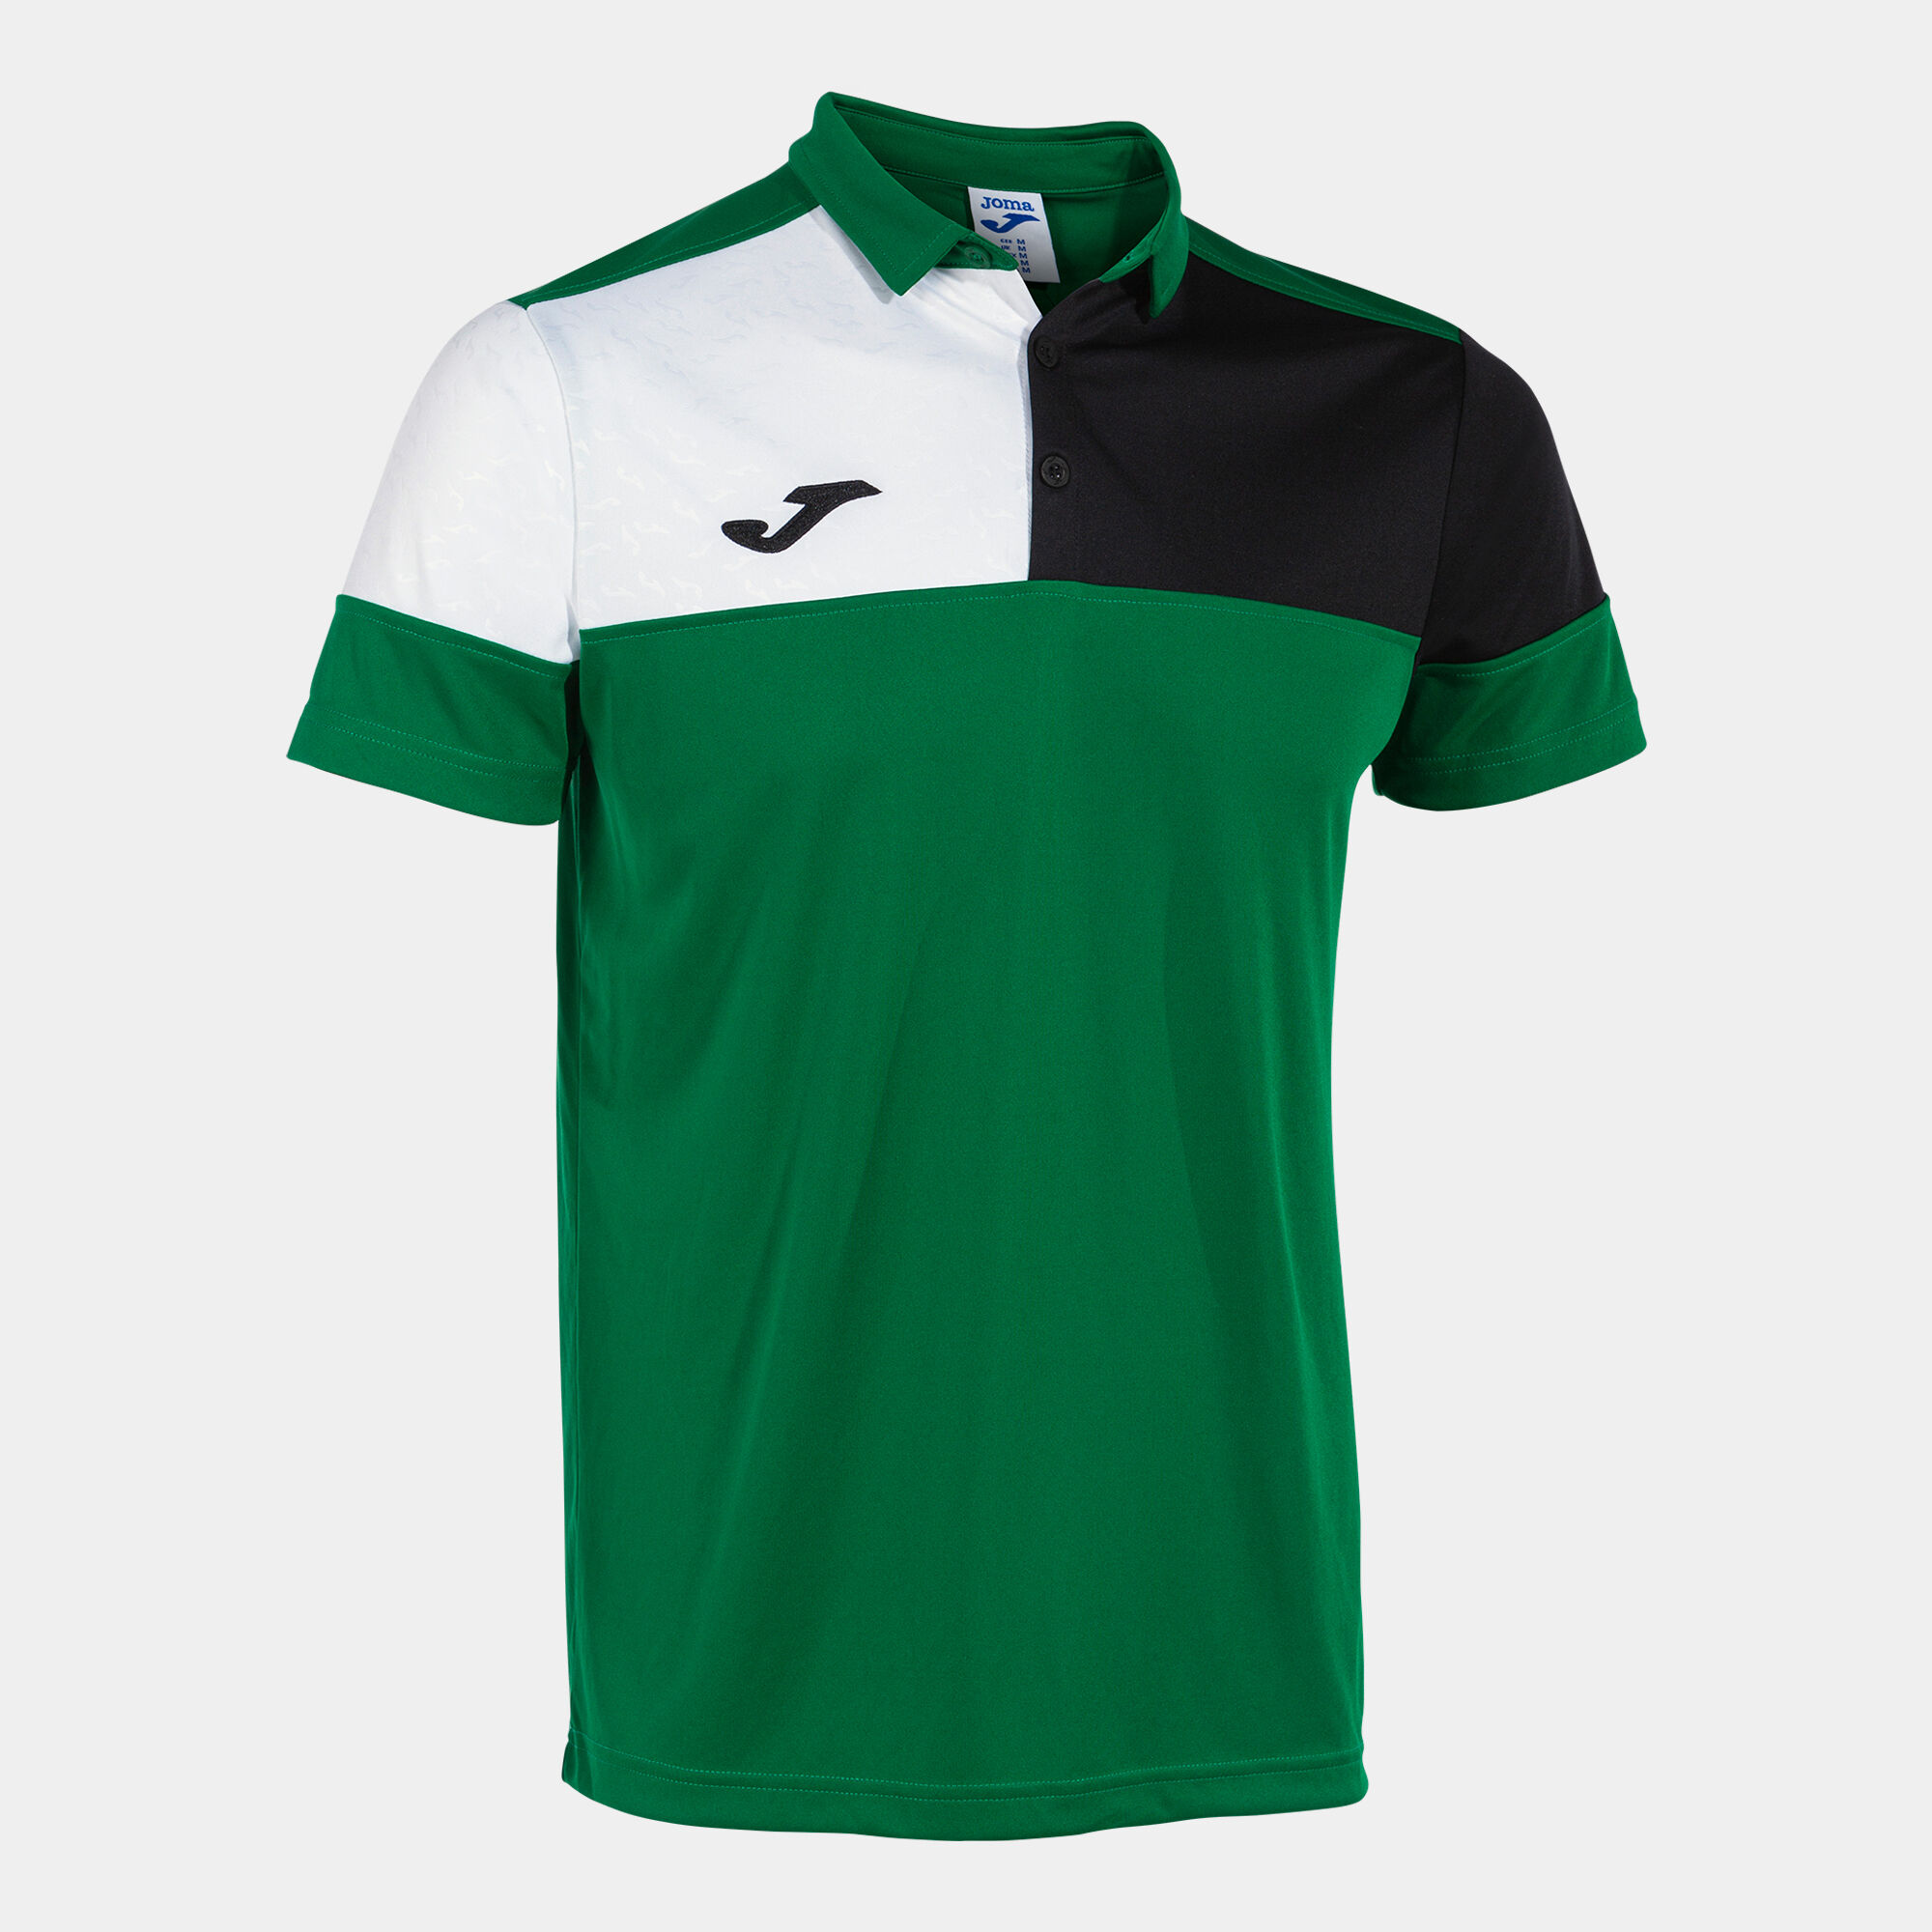 Polo shirt short-sleeve man Crew V green black